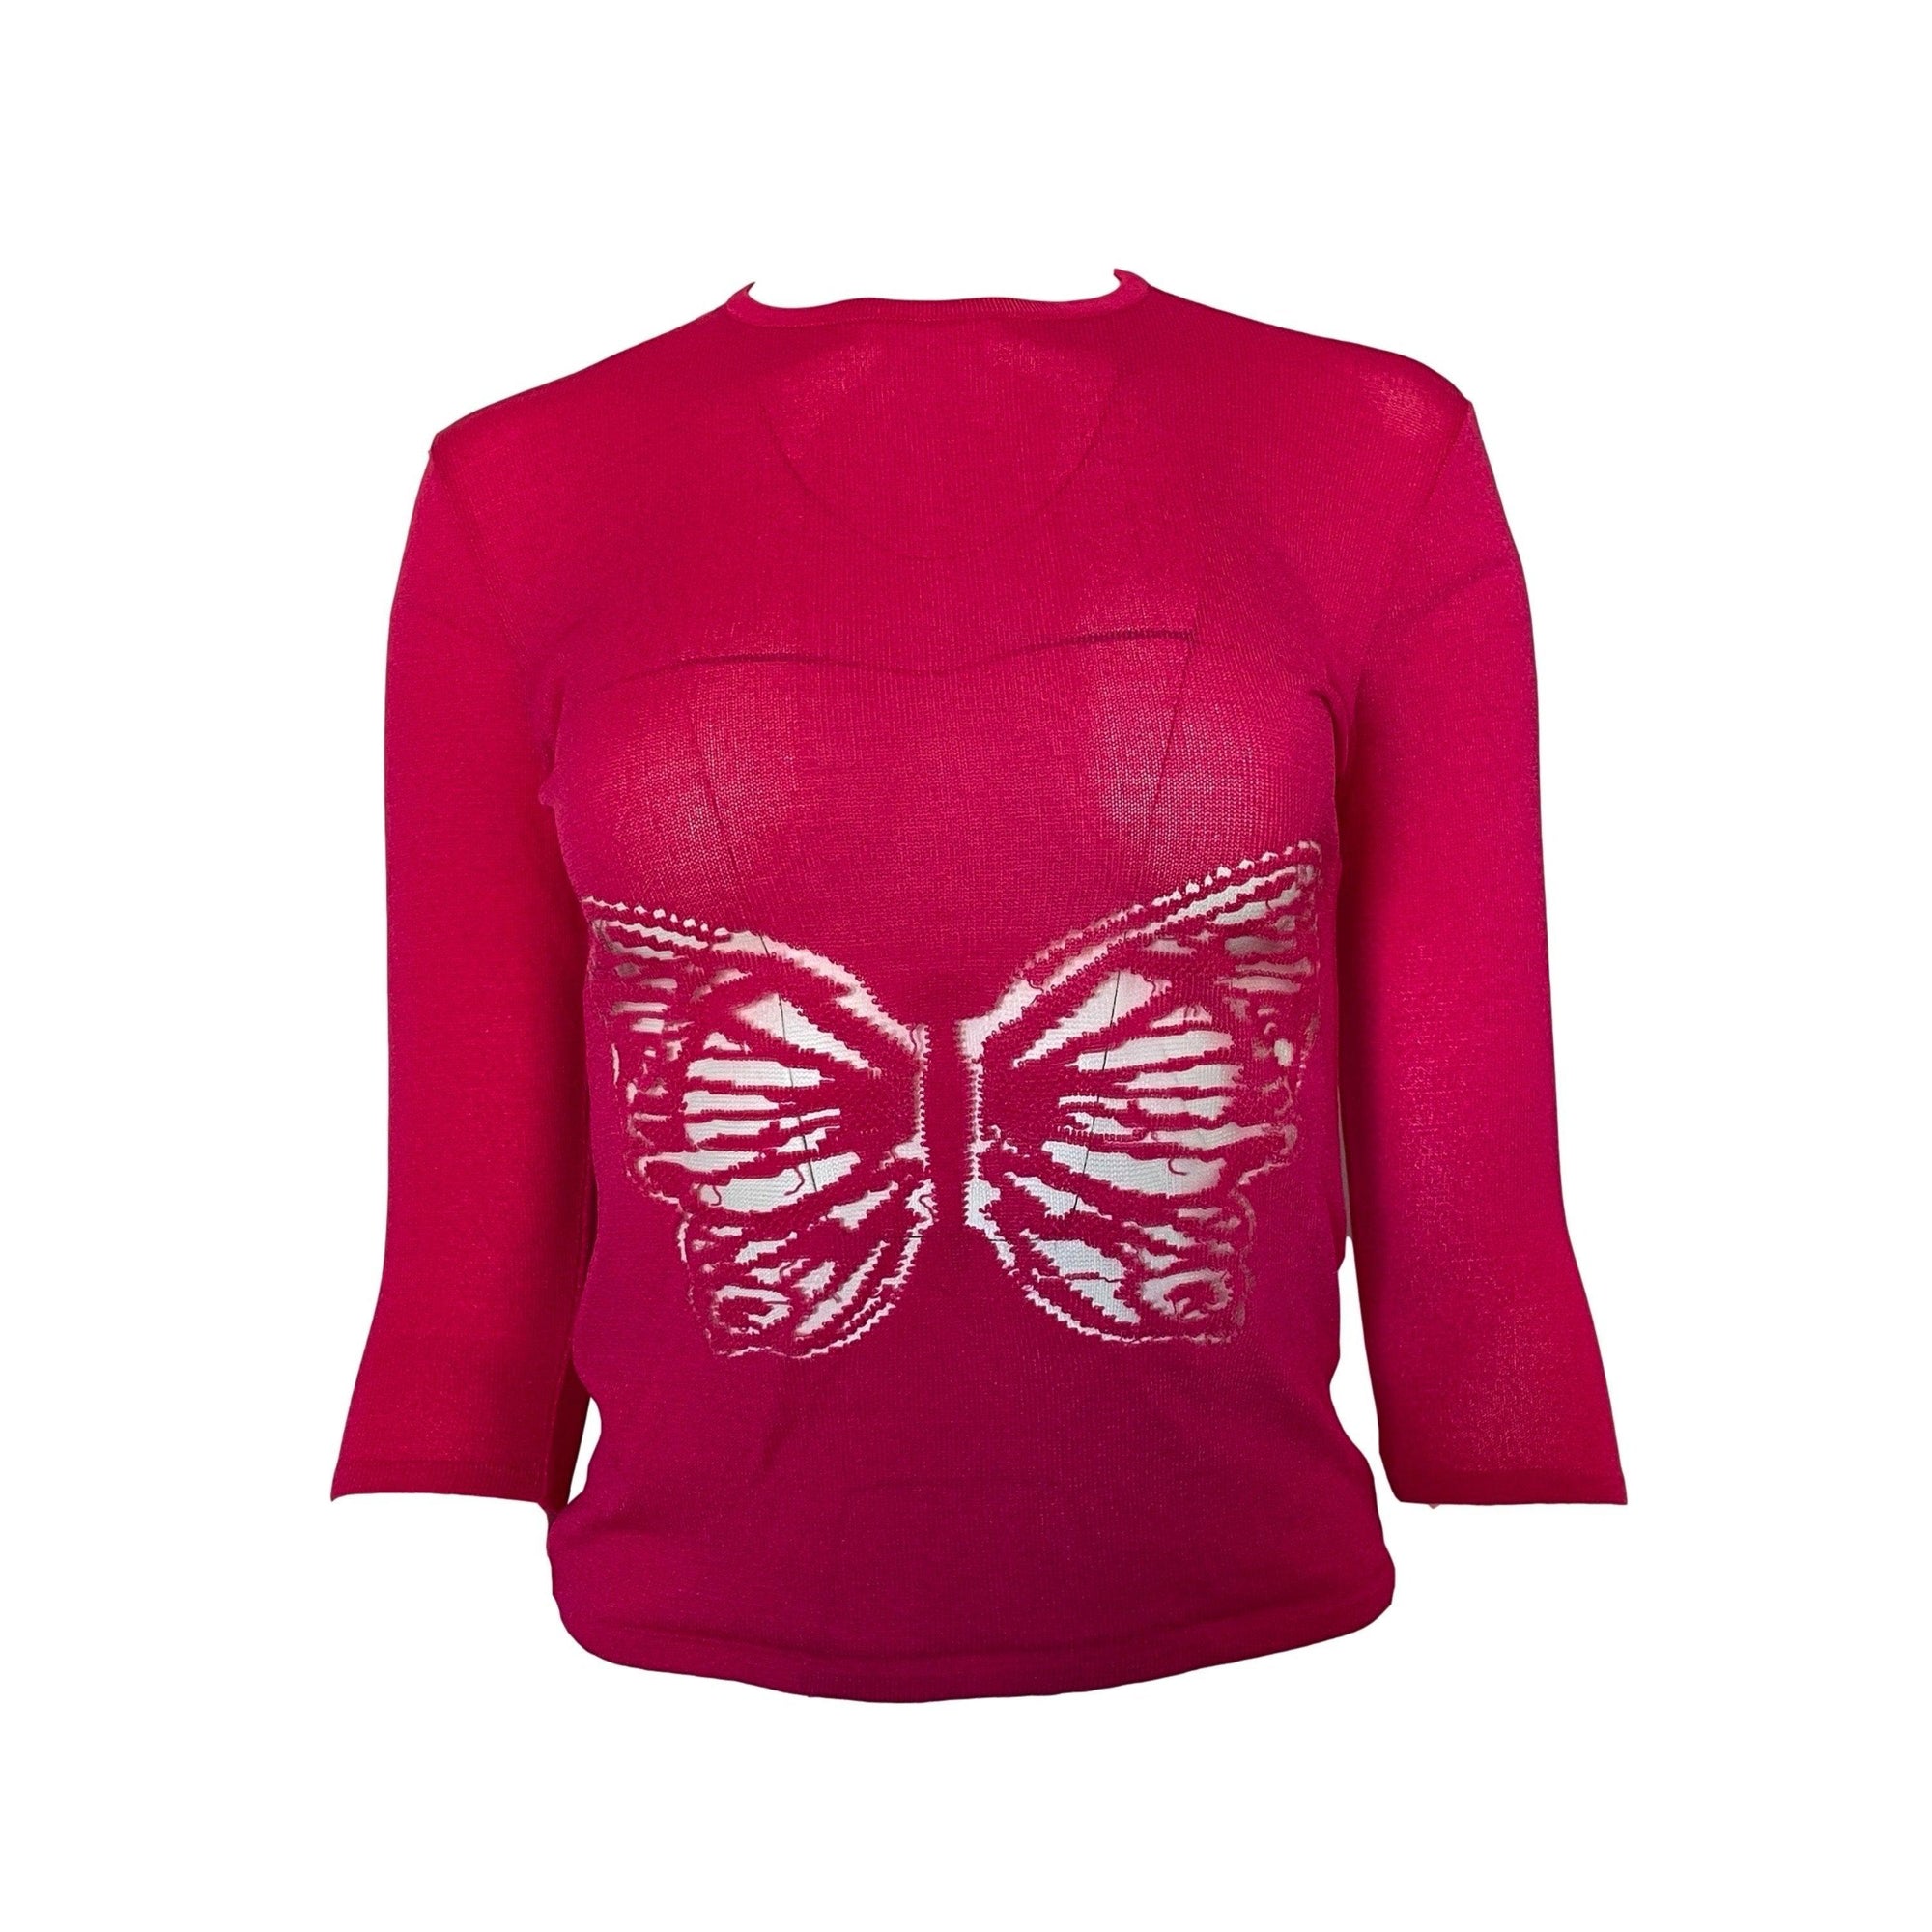 Versace Pink Butterfly Top - Apparel